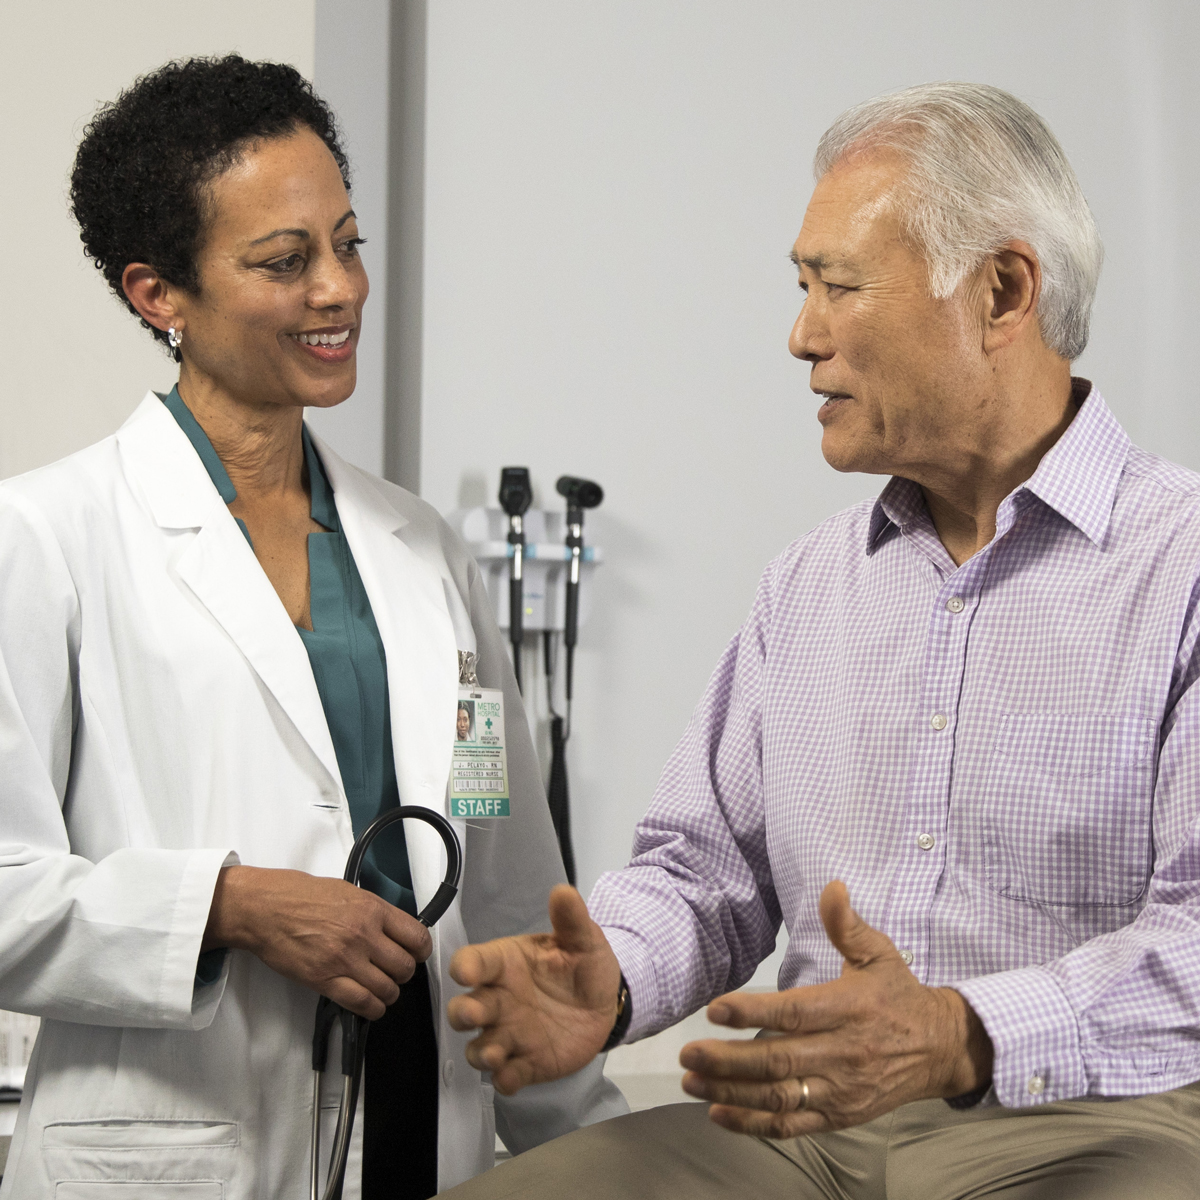 A doctor listens to a patient as he explains his symptoms.